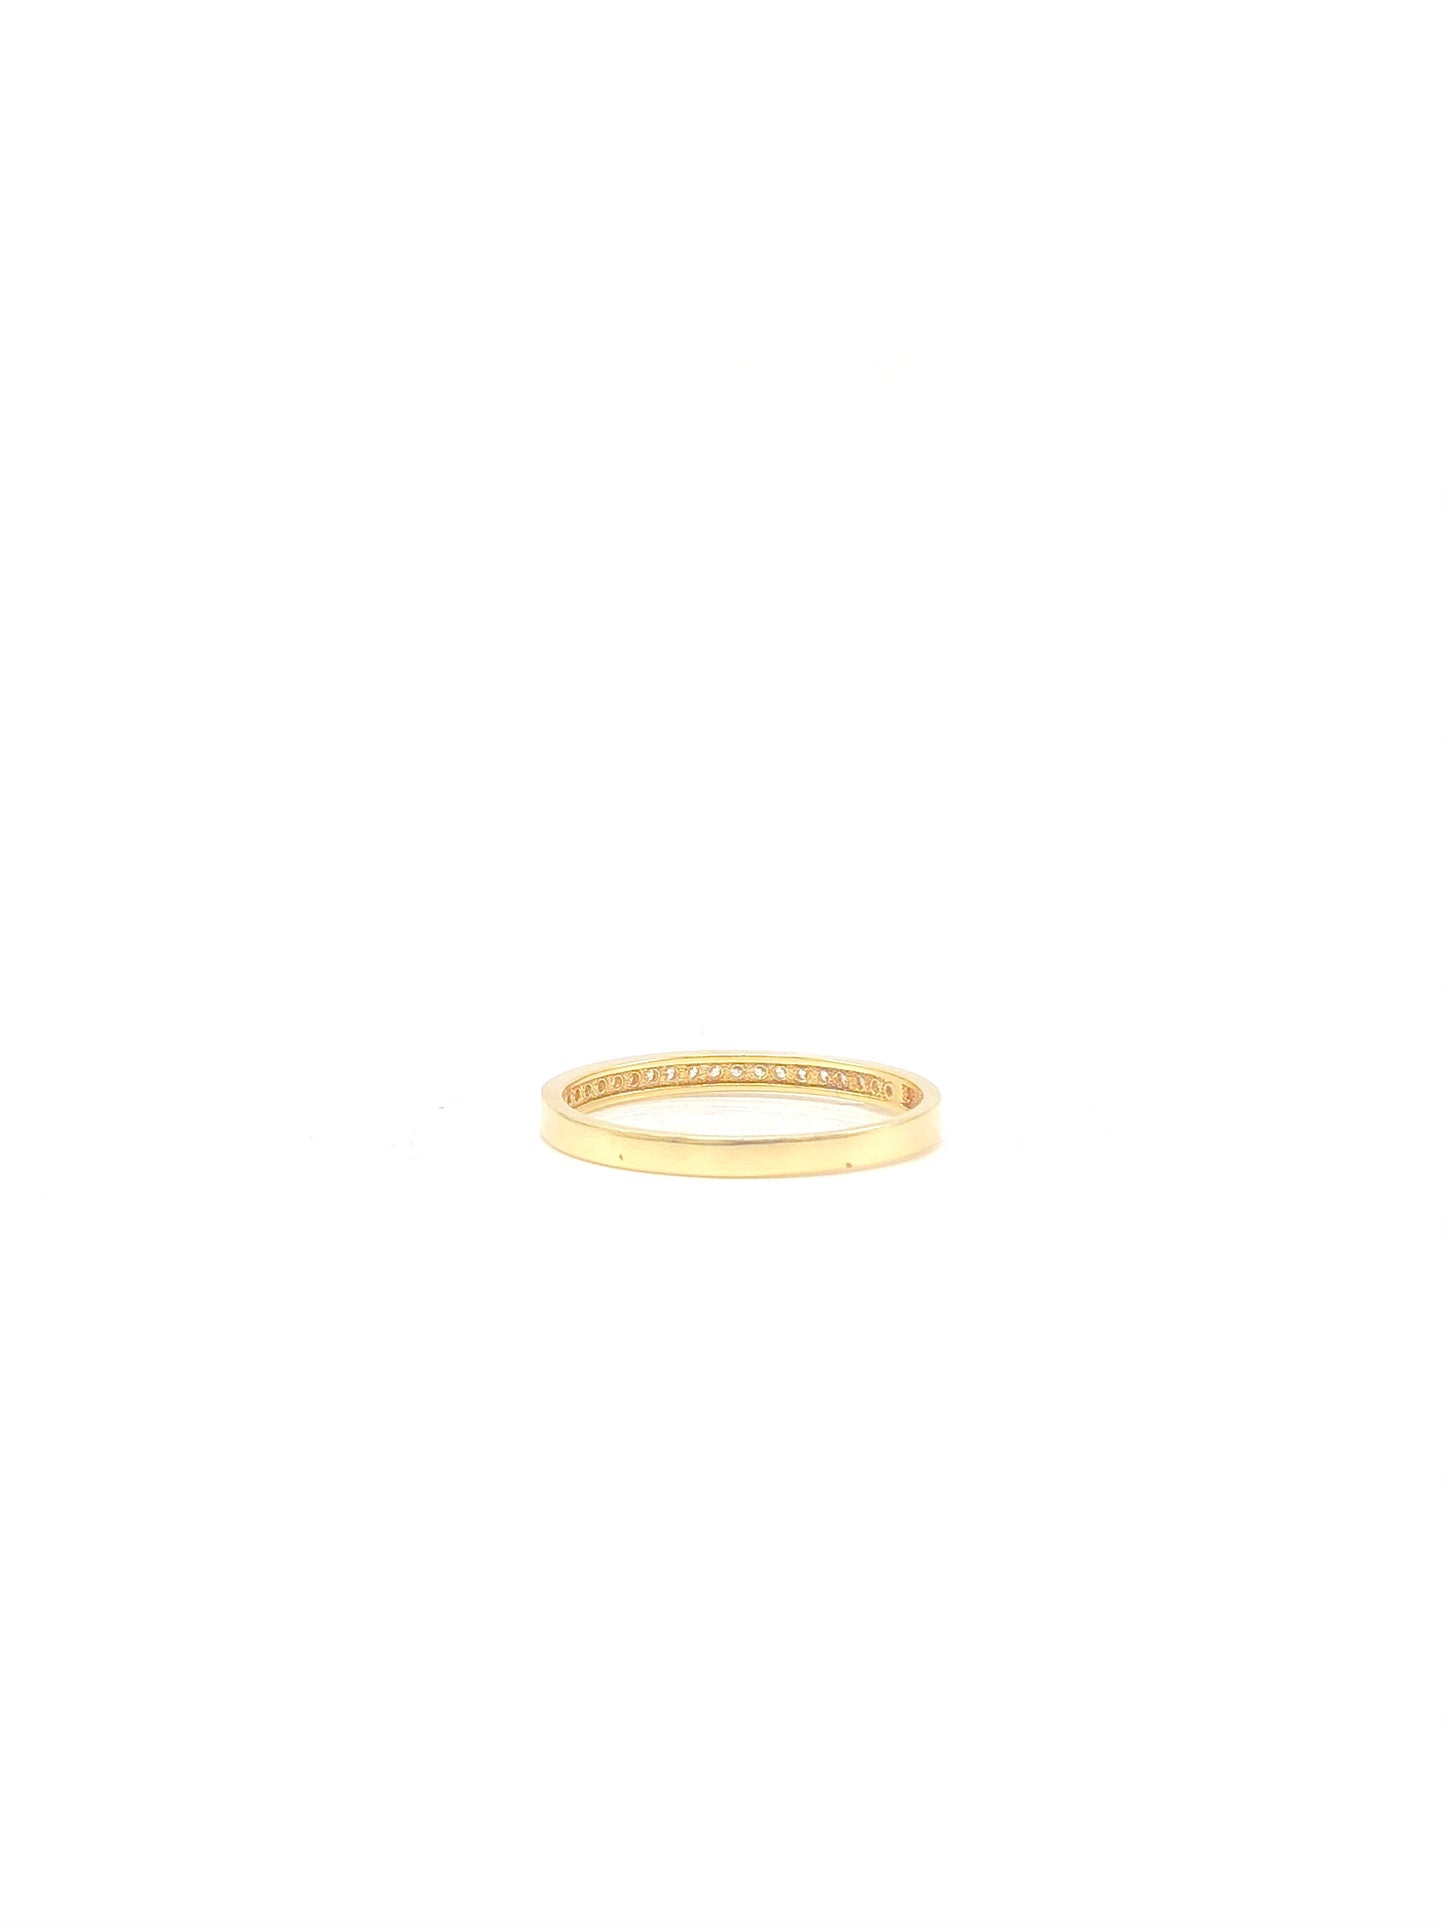 10K Yellow Gold Cubic Zirconia Band Ring